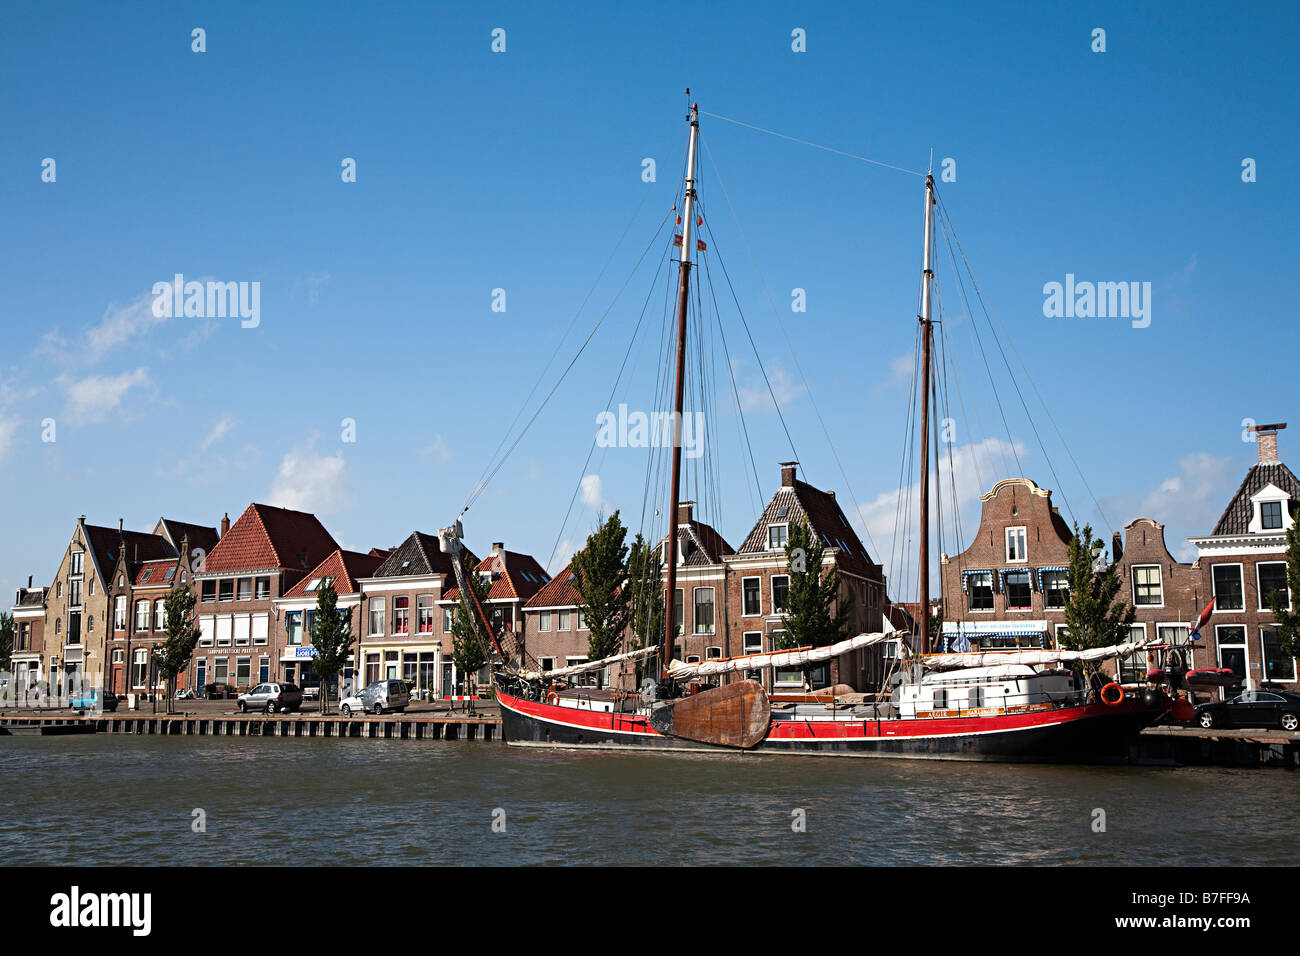 Fishing boat in Zuiderhaven (Southern Harbour) Harlingen Friesland Netherlands Stock Photo